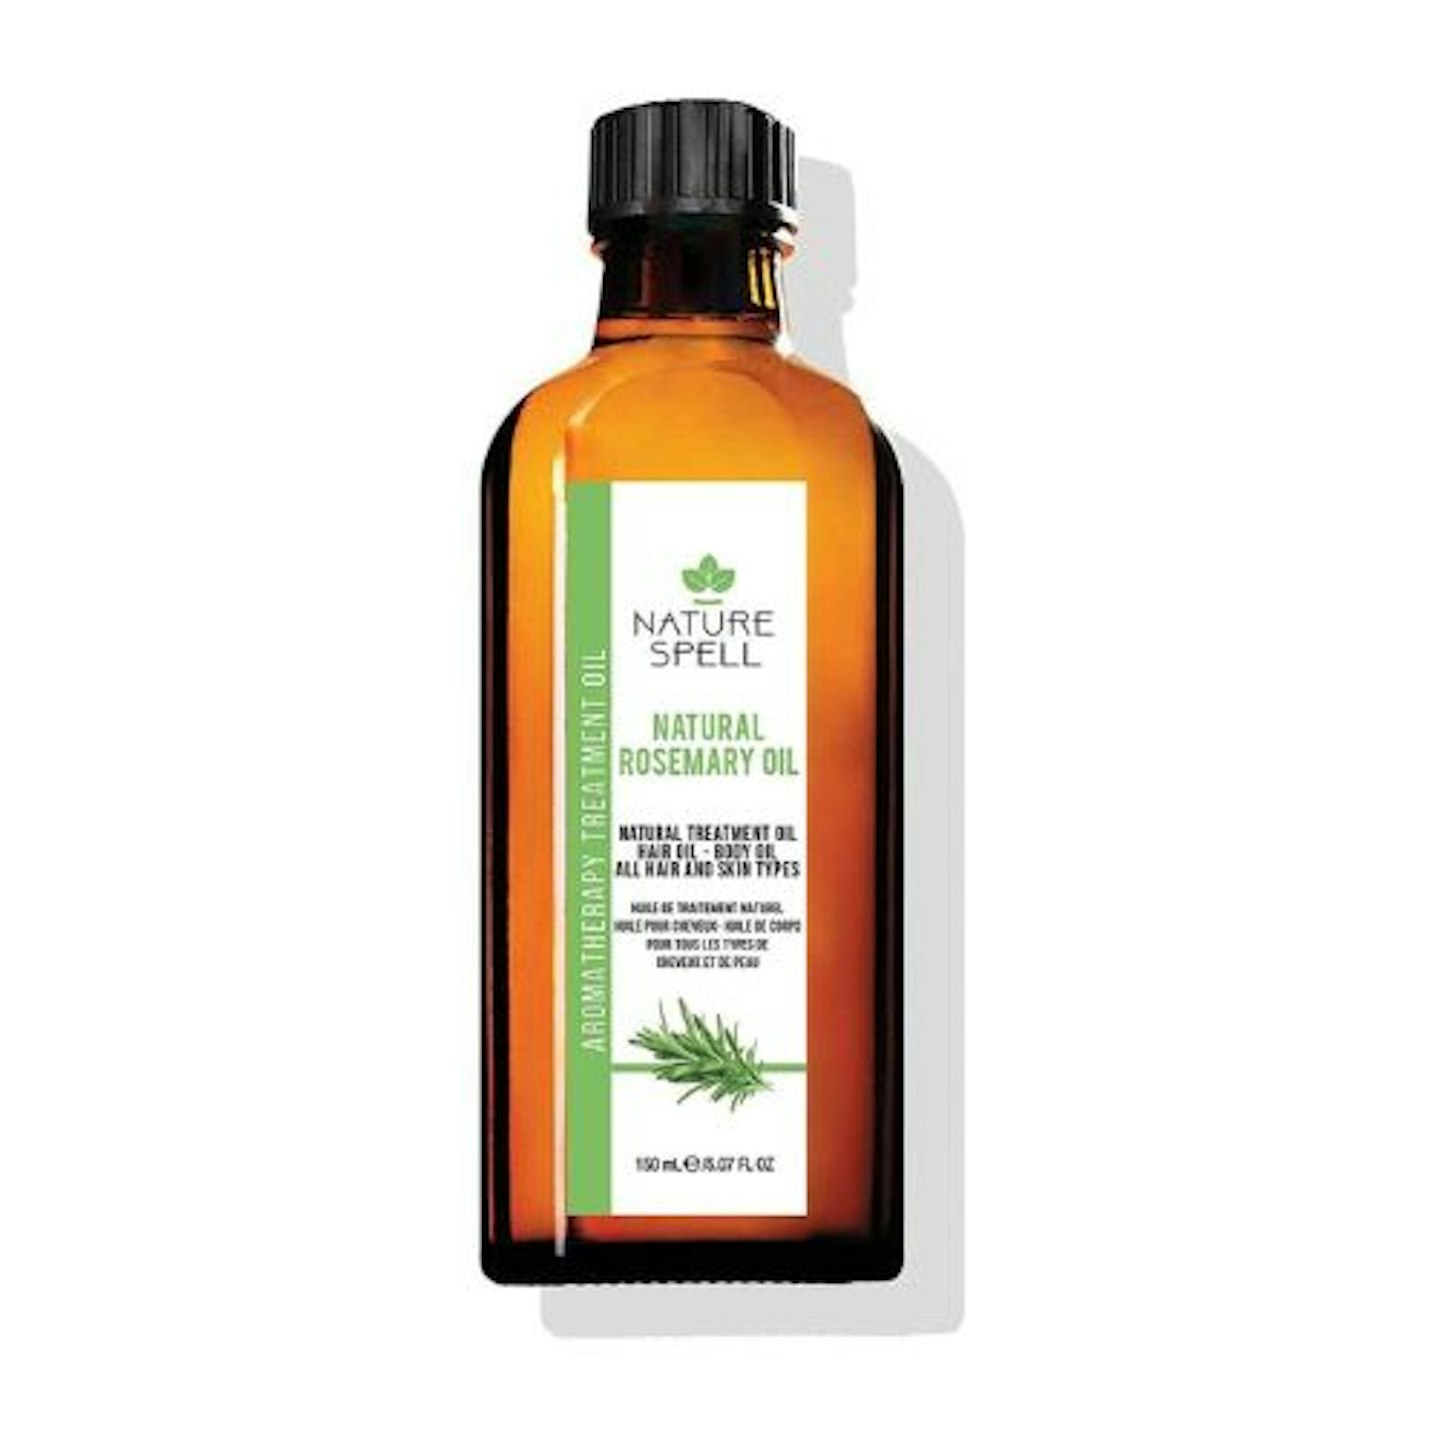 Nature Spell Rosemary Oil For Hair And Skin